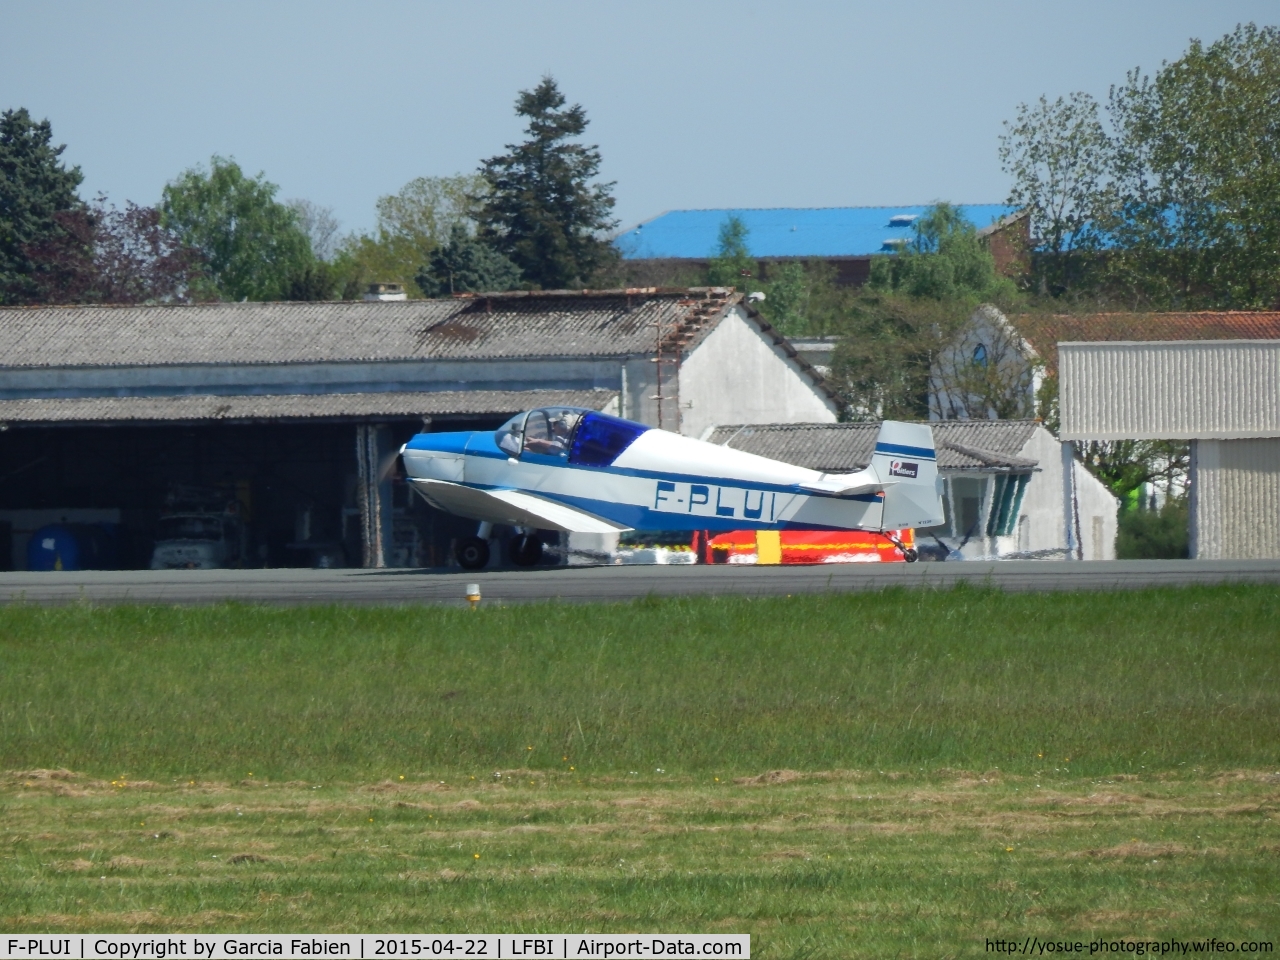 F-PLUI, Jodel D-119 C/N 1226, The Jodel 119 F-PLUI on the runway of the airport of Poitiers-Biard (LFBI), France.